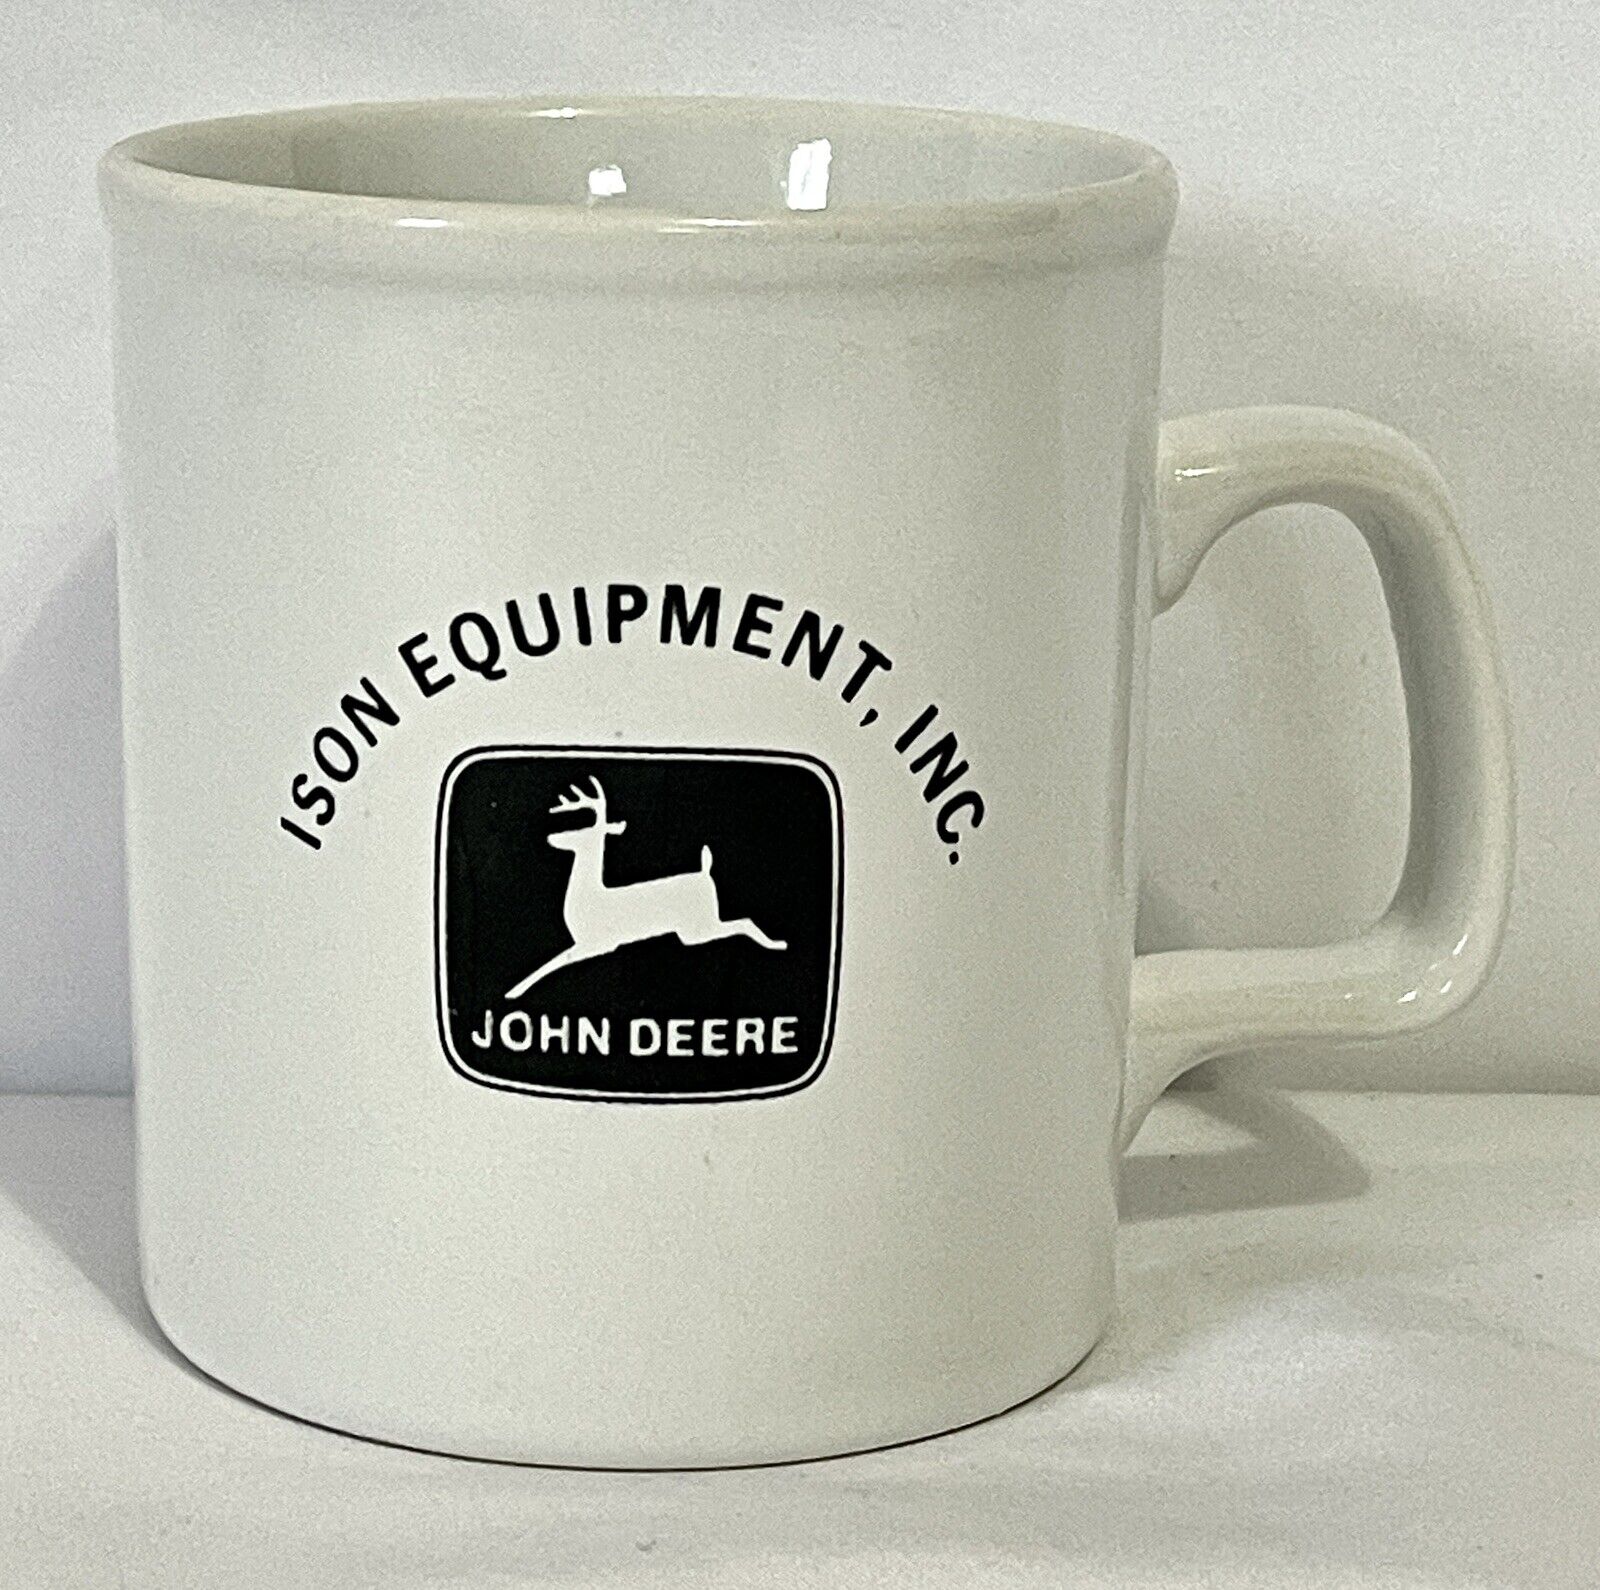 Vintage 1950s John Deere ISON Equipment Inc. Advertising Coffee Mug